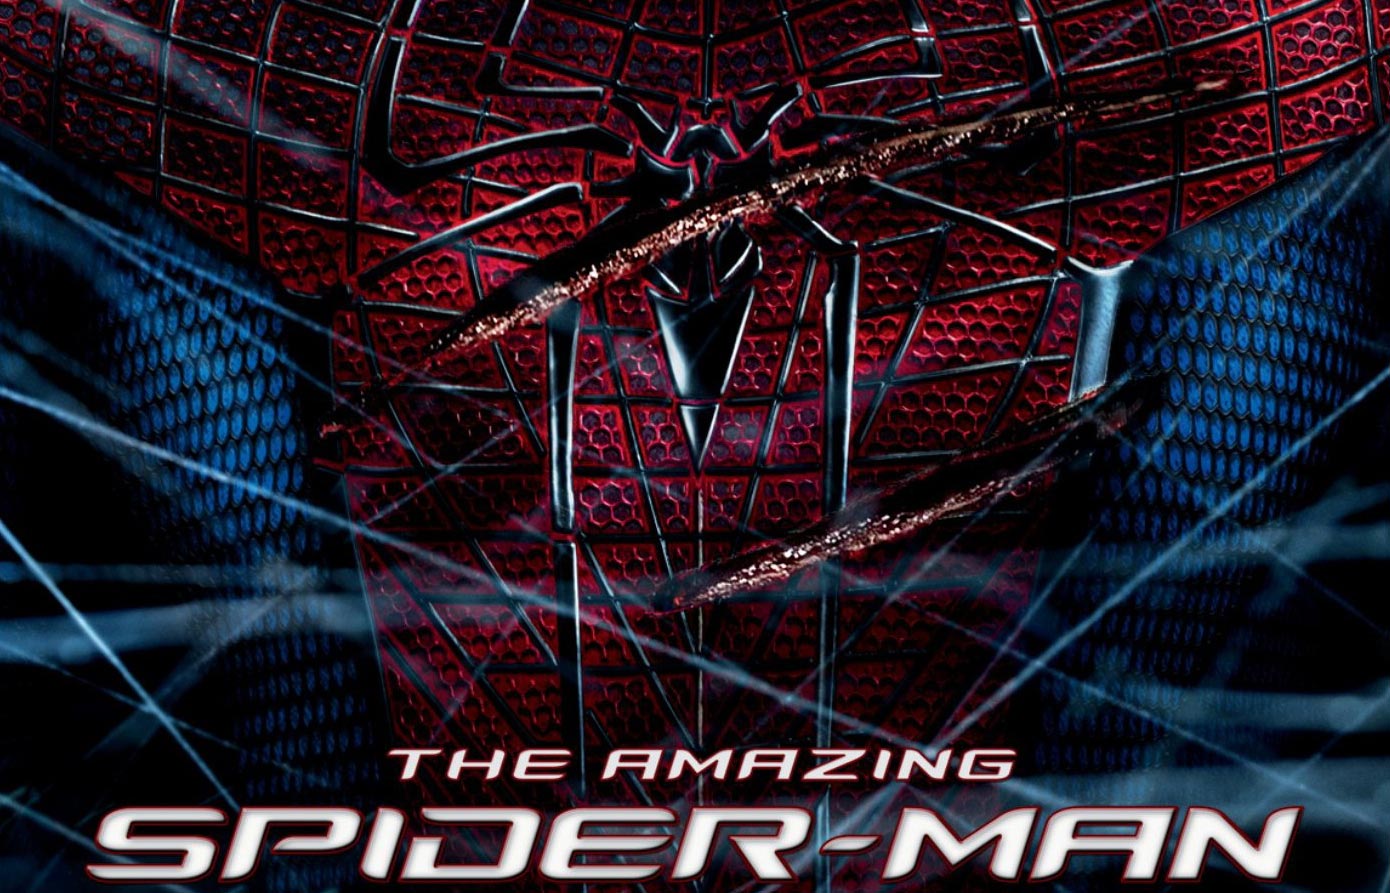 http://www.filmofilia.com/wp-content/uploads/2012/04/The-Amazing-Spider-Man.jpg